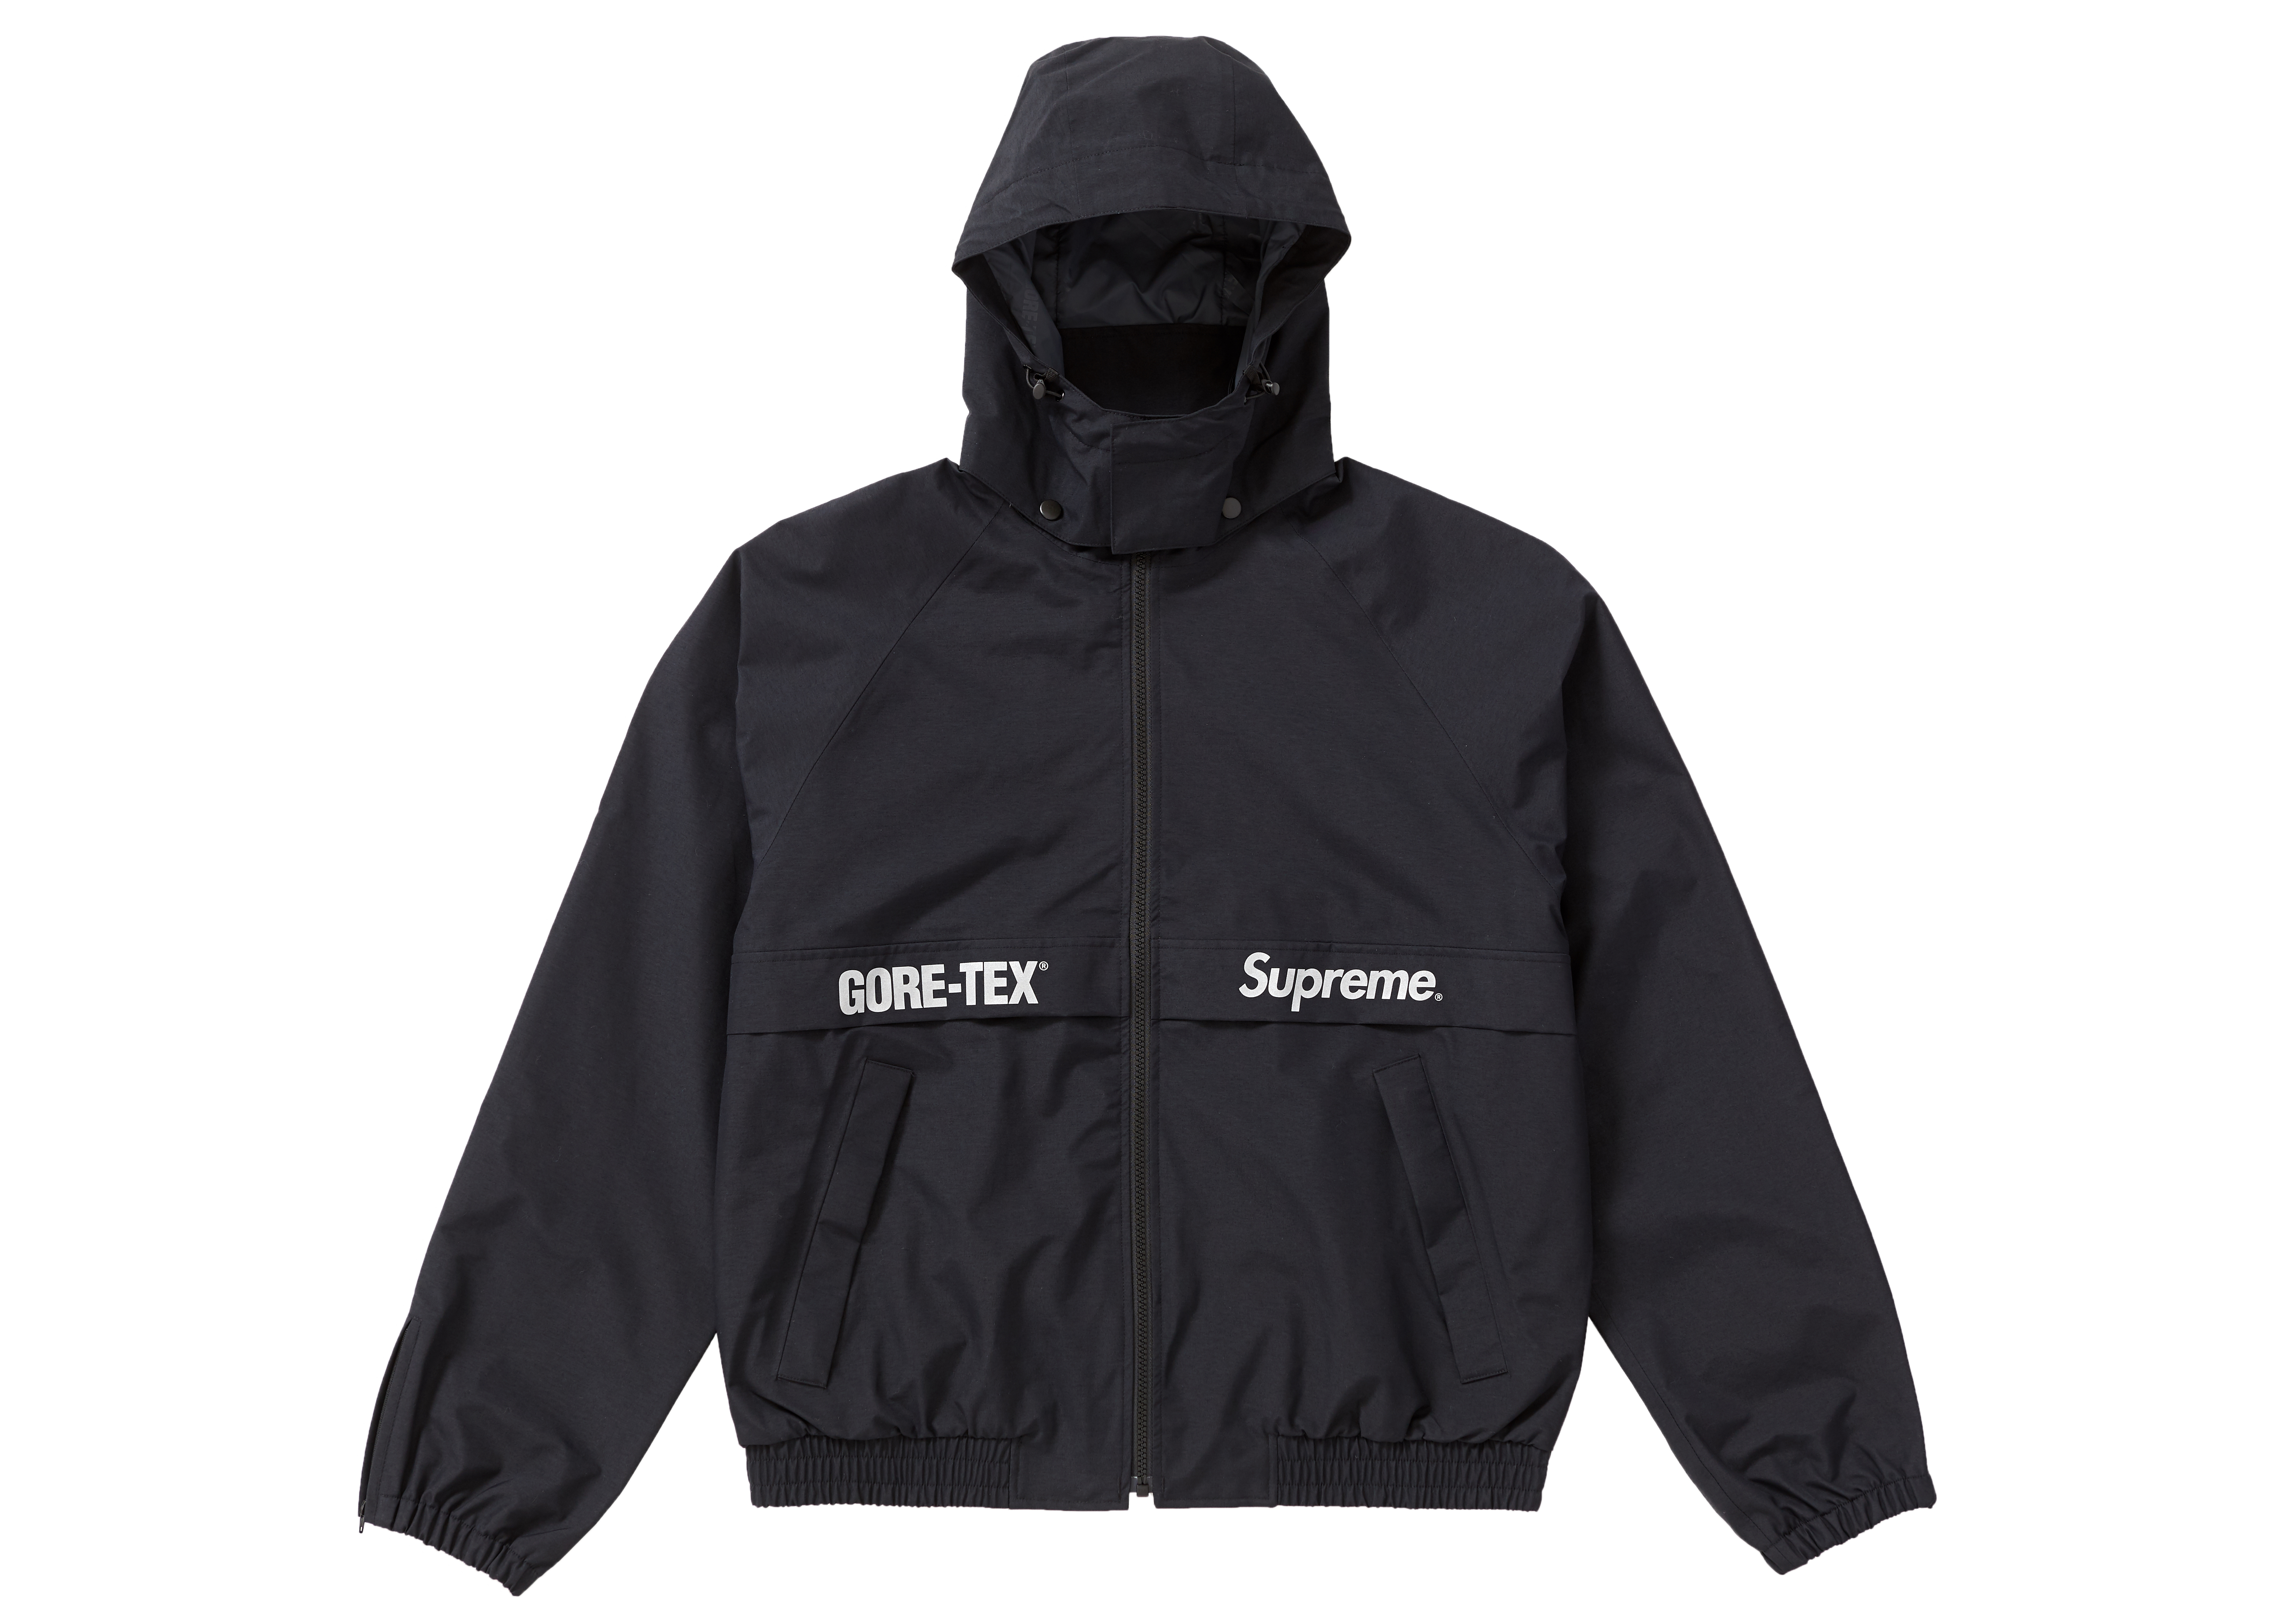 Supreme GORE-TEX Track Jacket